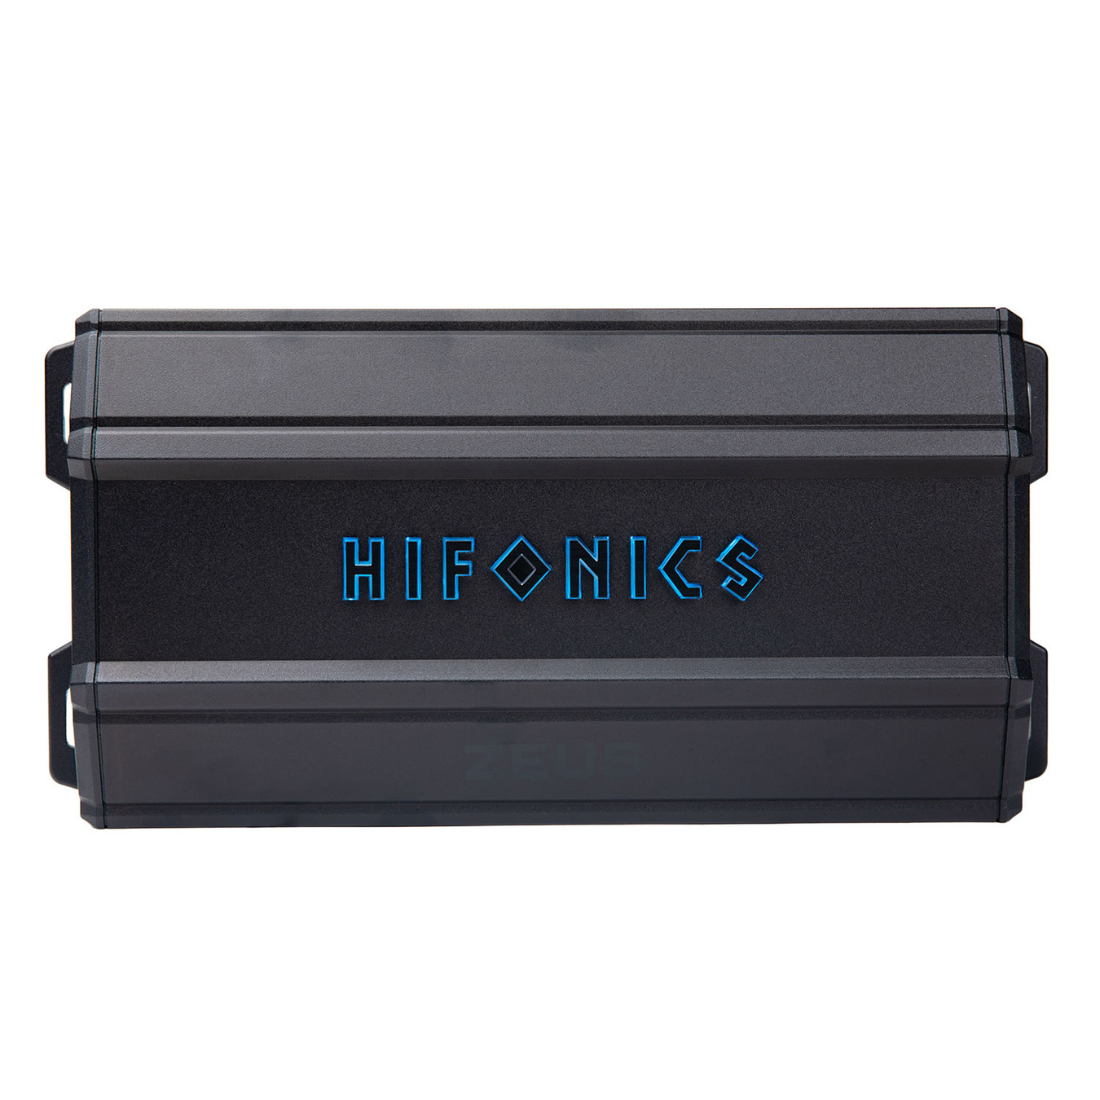 Hifonics ZD-1350.4D 4-Channel 1350W Max Class-D Full Range Car Audio Amplifier